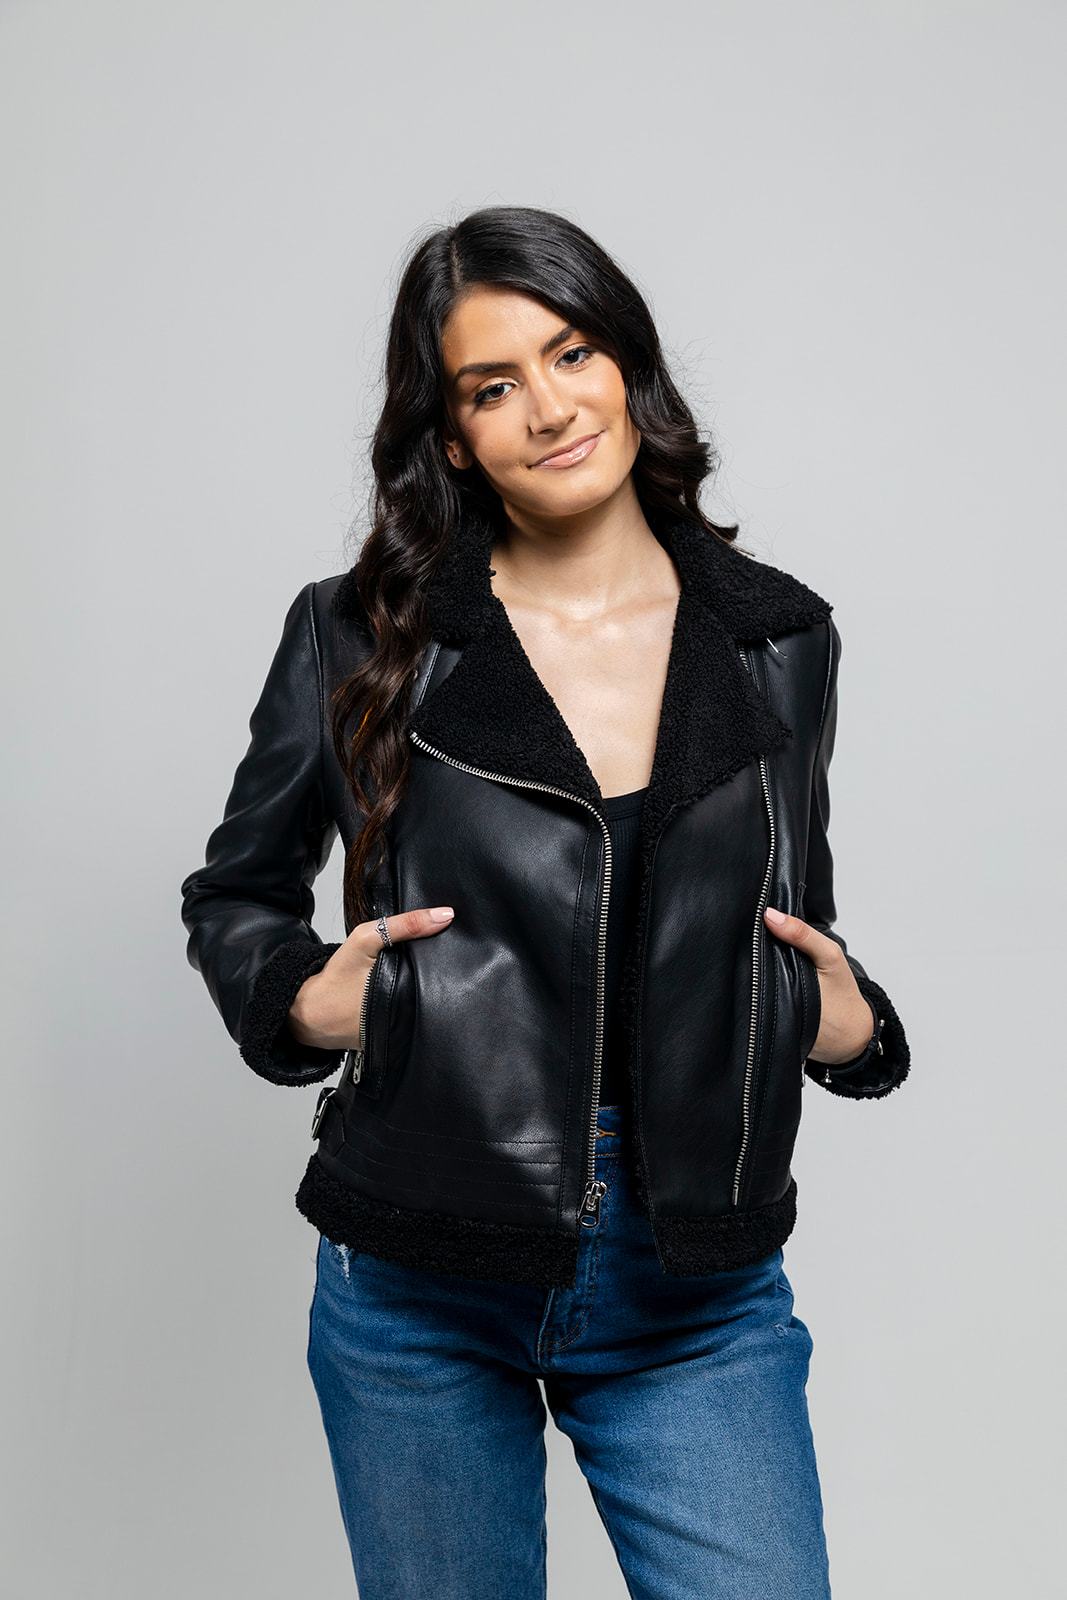 Chelsea - Women's Faux Leather Jacket (POS) Women's Fashion Leather Jacket Whet Blu NYC XS Black 